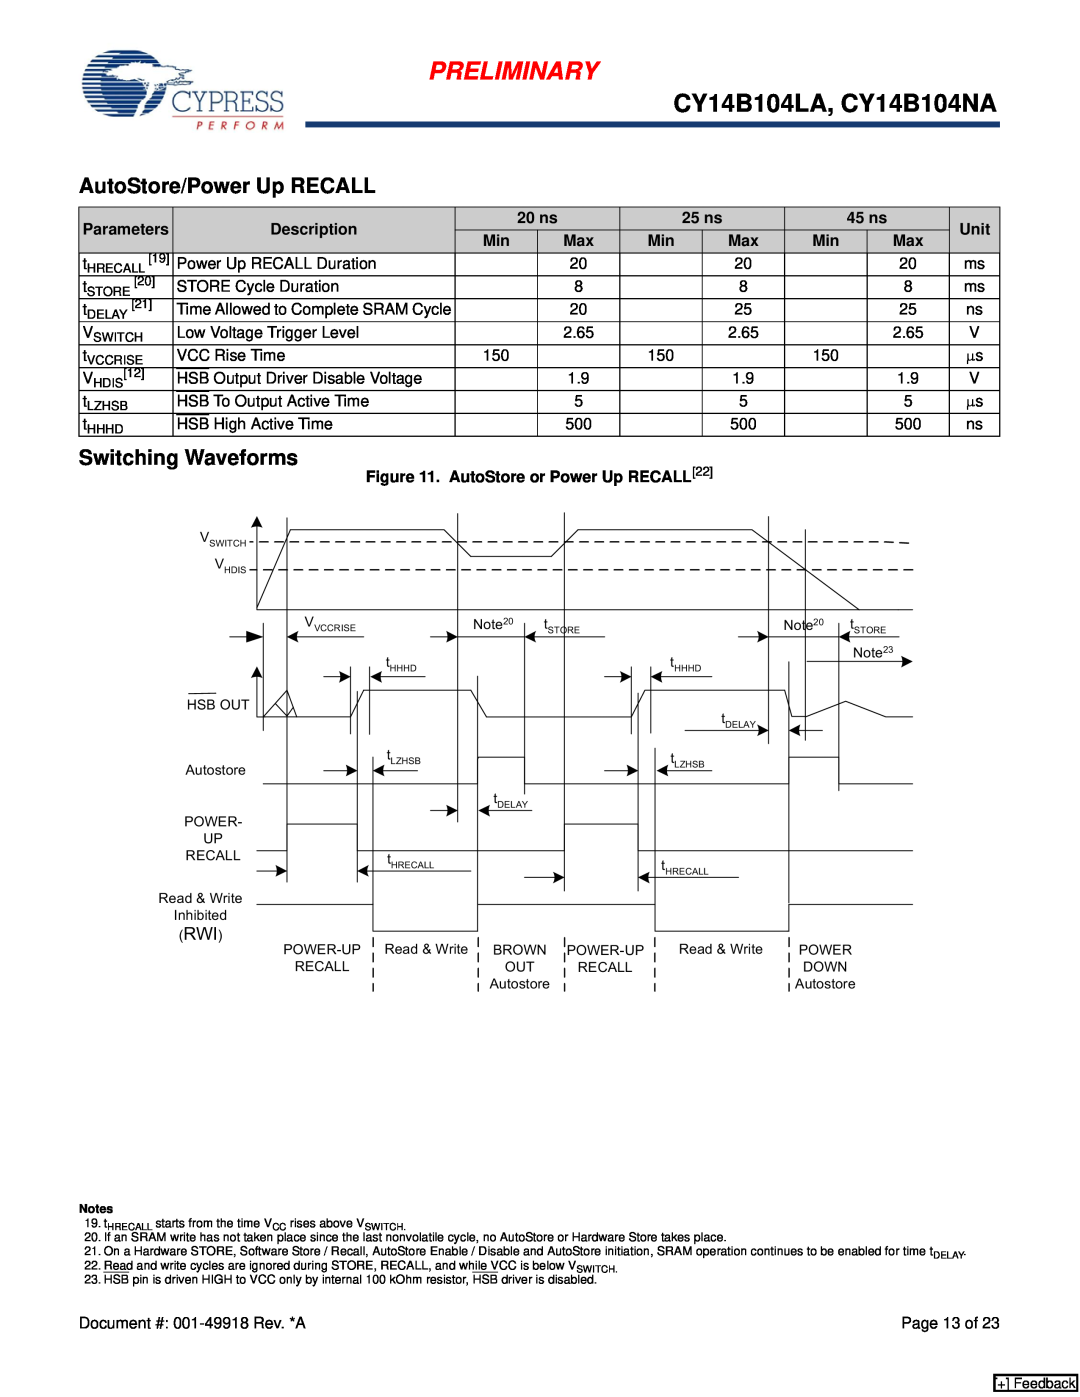 Cypress manual AutoStore/Power Up RECALL, Preliminary, CY14B104LA, CY14B104NA, Switching Waveforms 